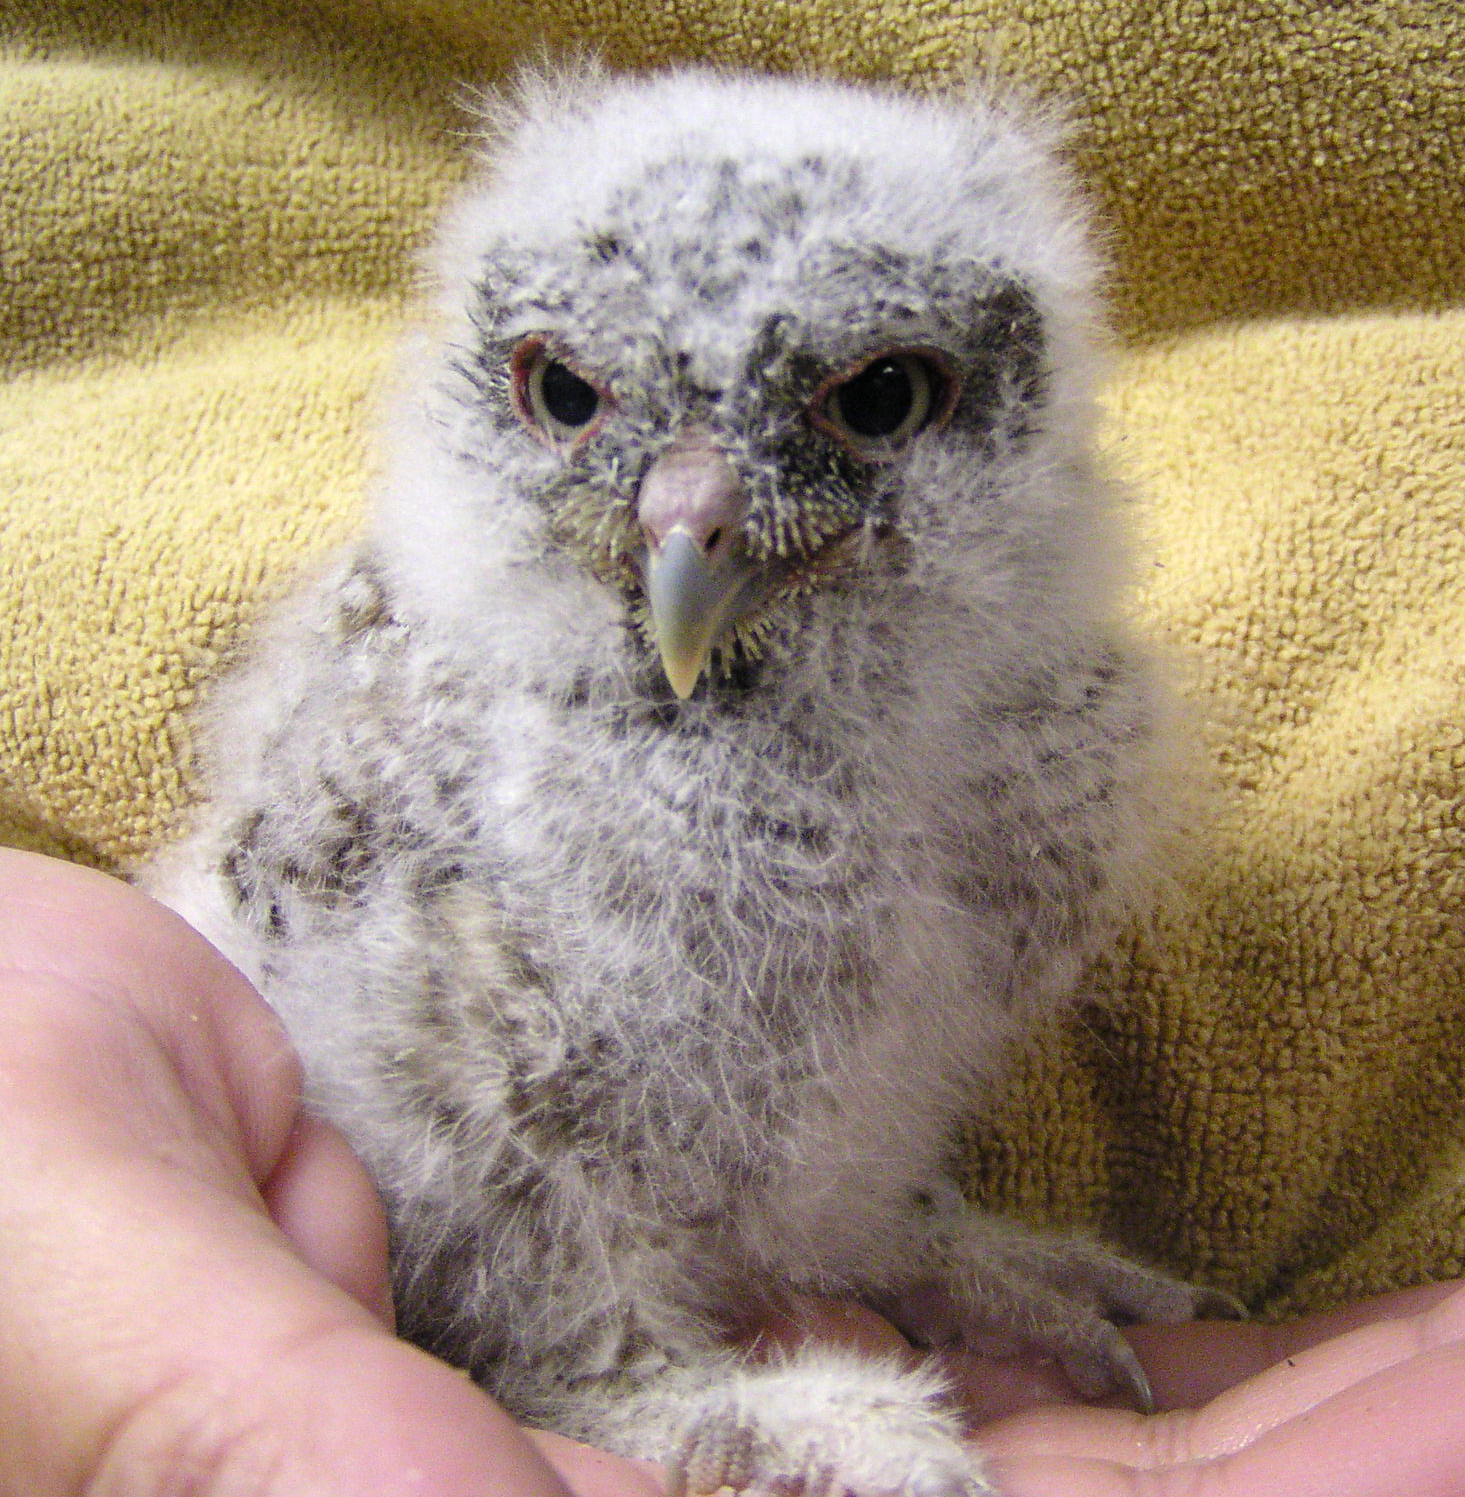 It's raining baby owls | Tallahassee.com Community Blogs